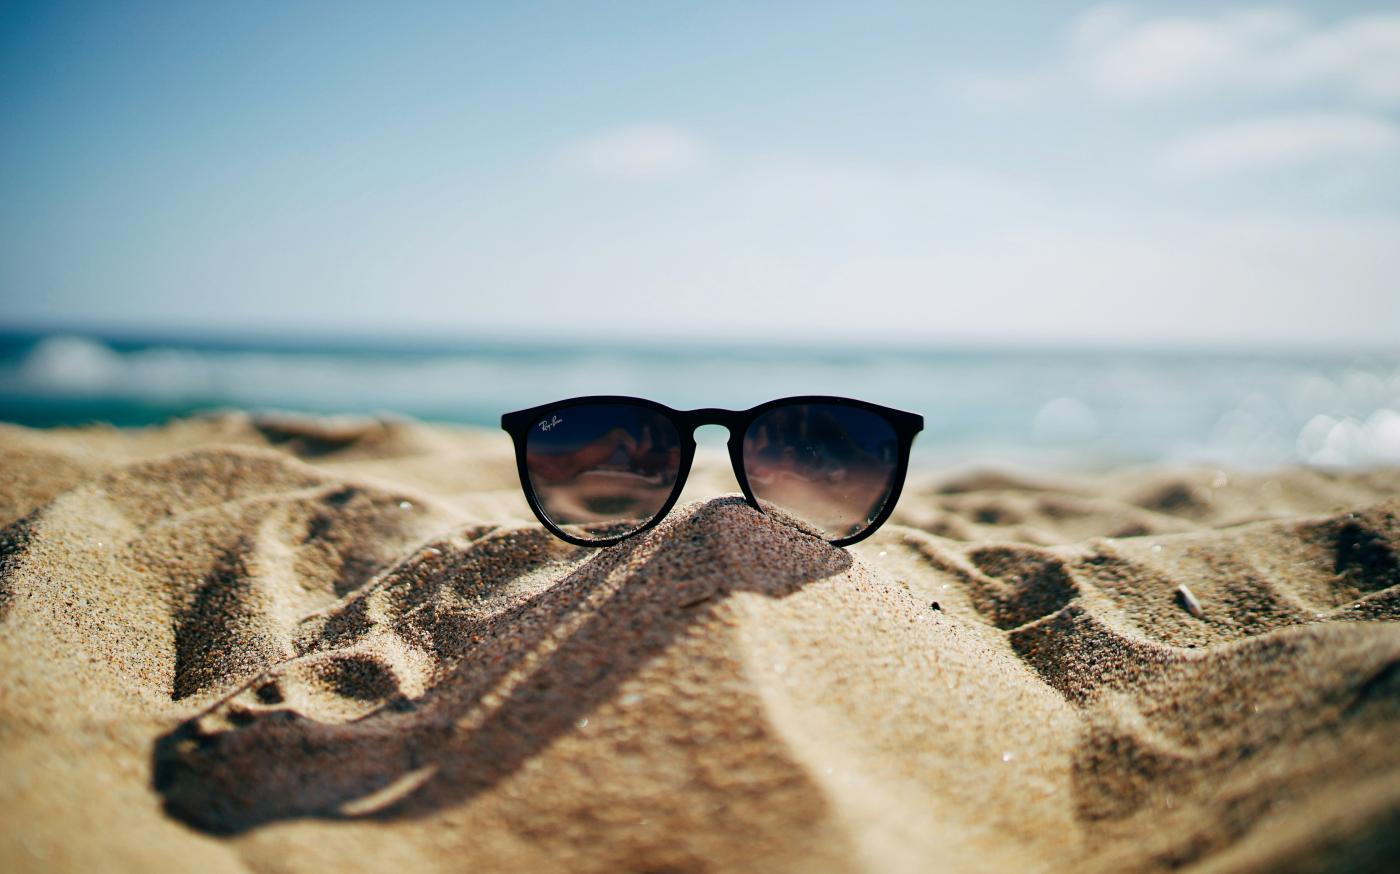 black Ray-Ban Wayfarer sunglasses on beach sand by Ethan Robertson courtesy of Unsplash.